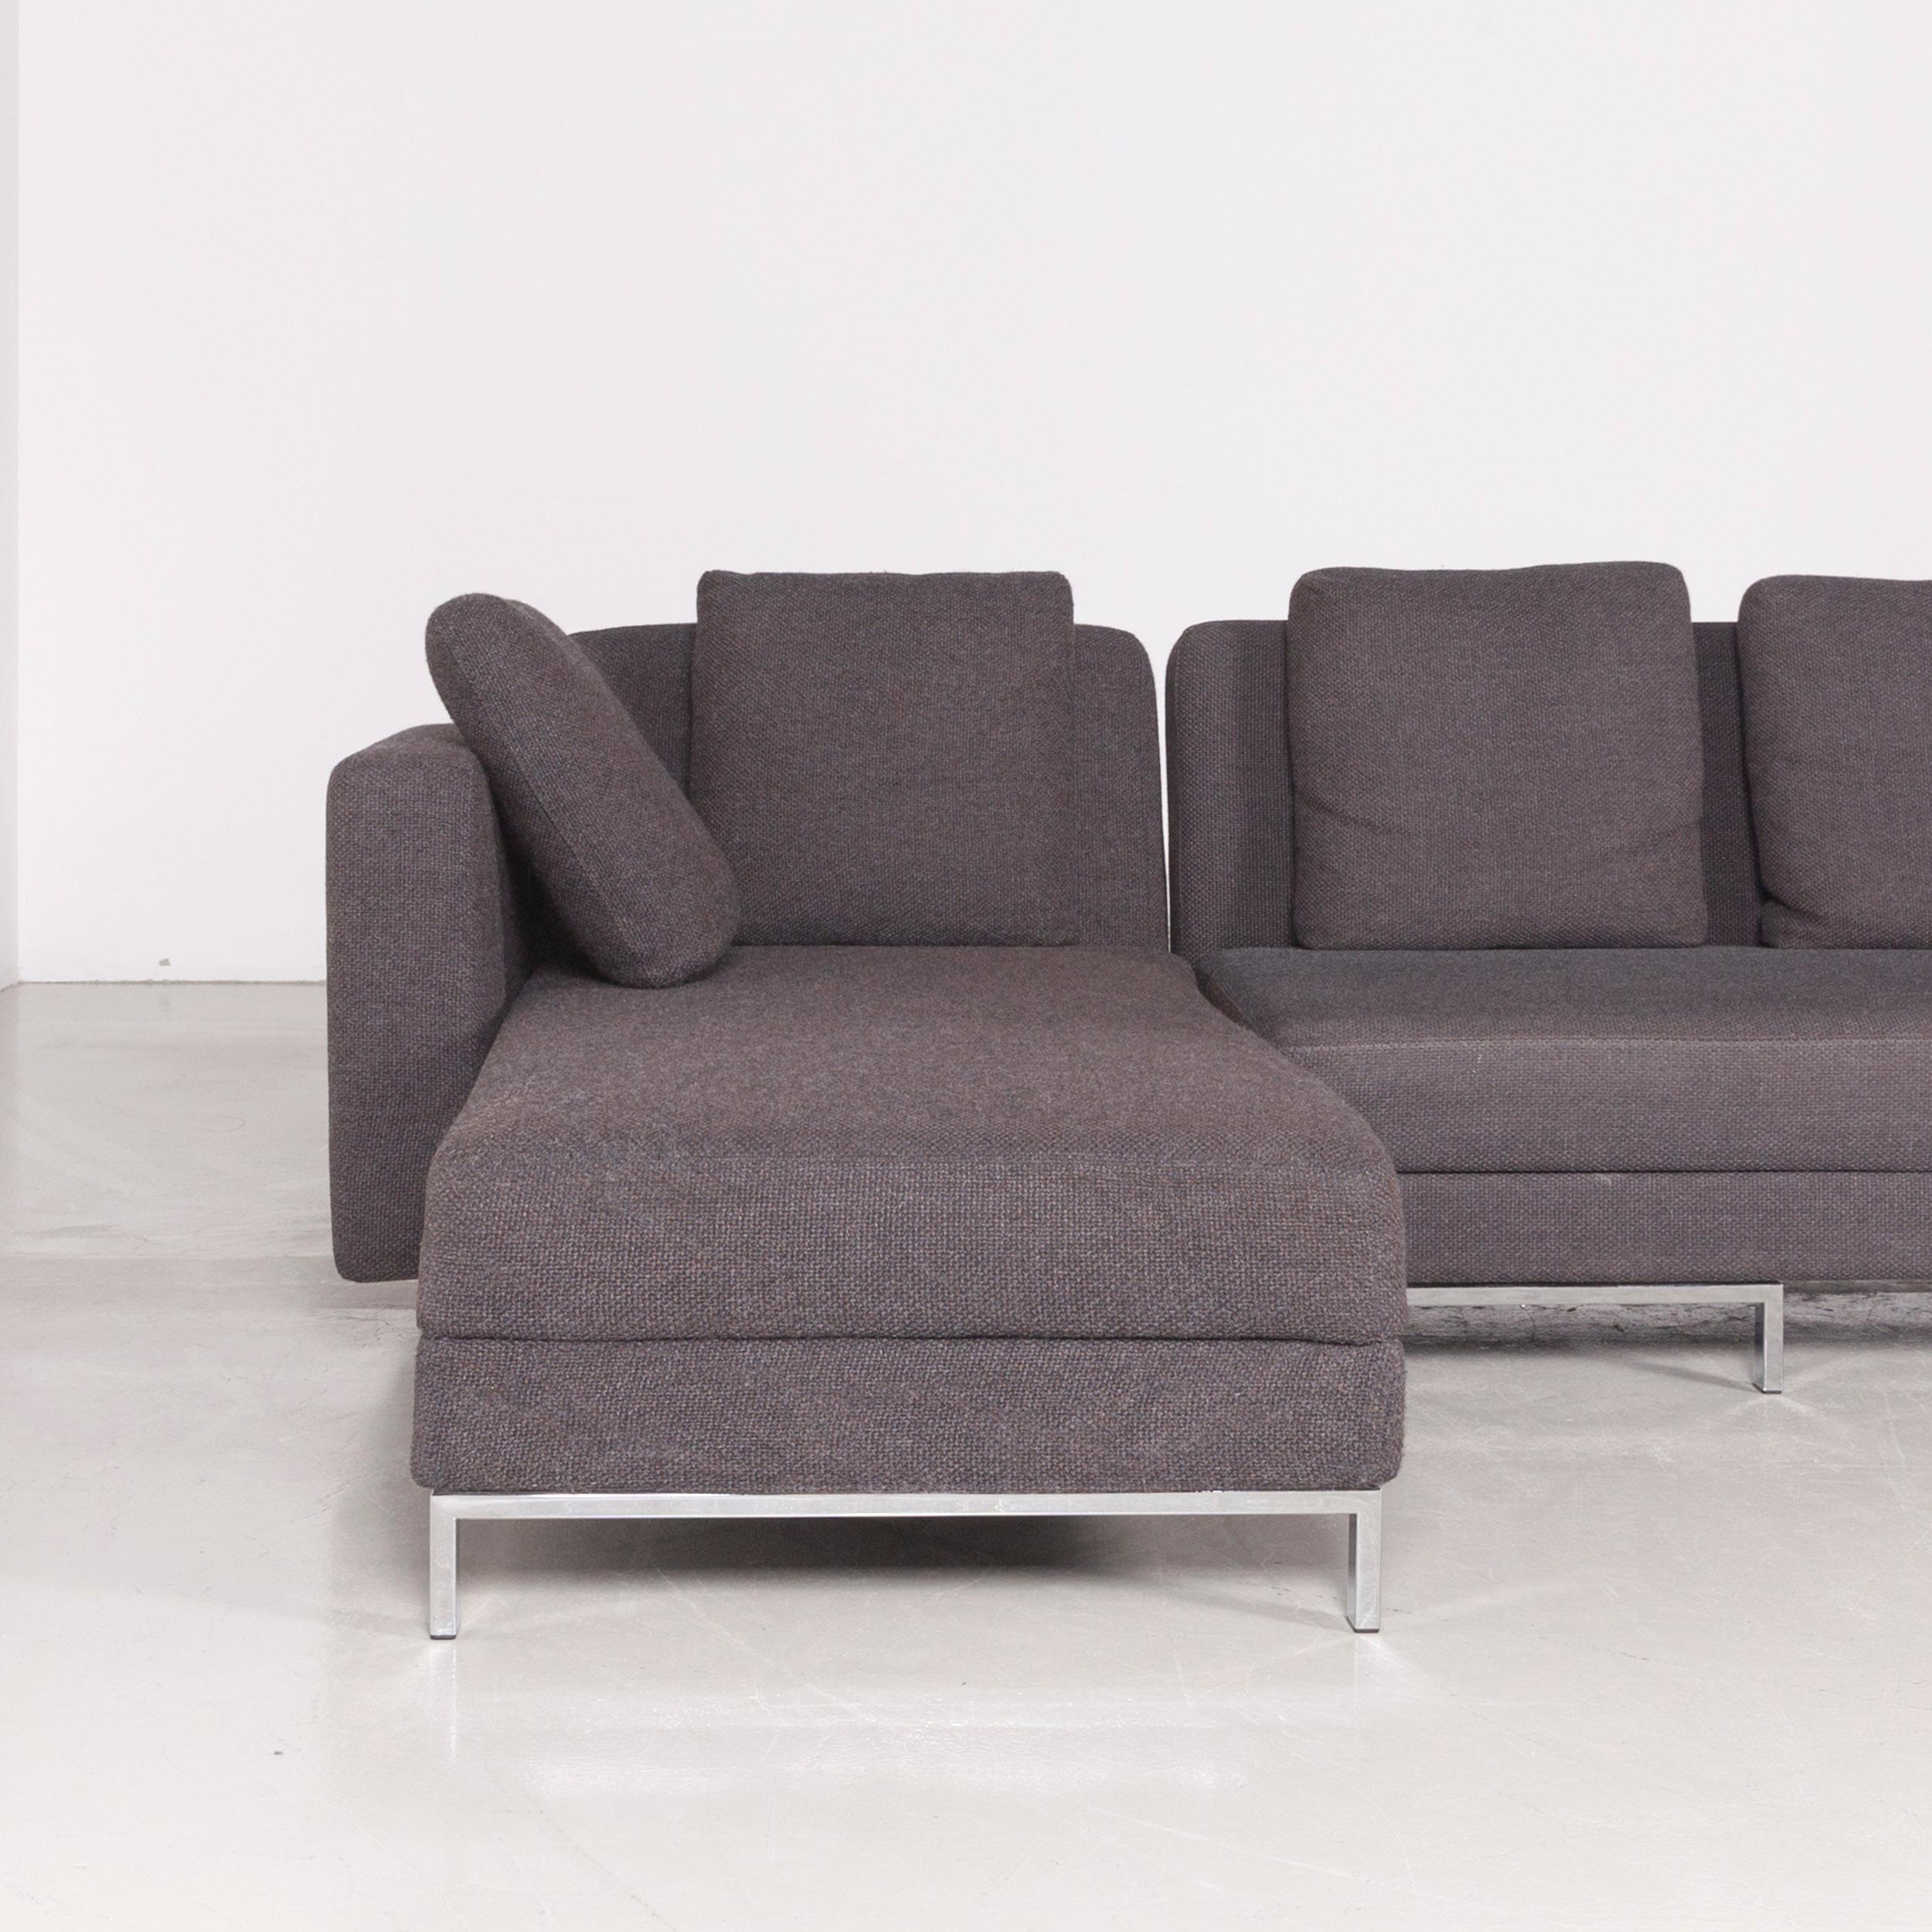 Brühl & Sippold Moule Designer Corner-Sofa Grey Fabric In Excellent Condition For Sale In Cologne, DE